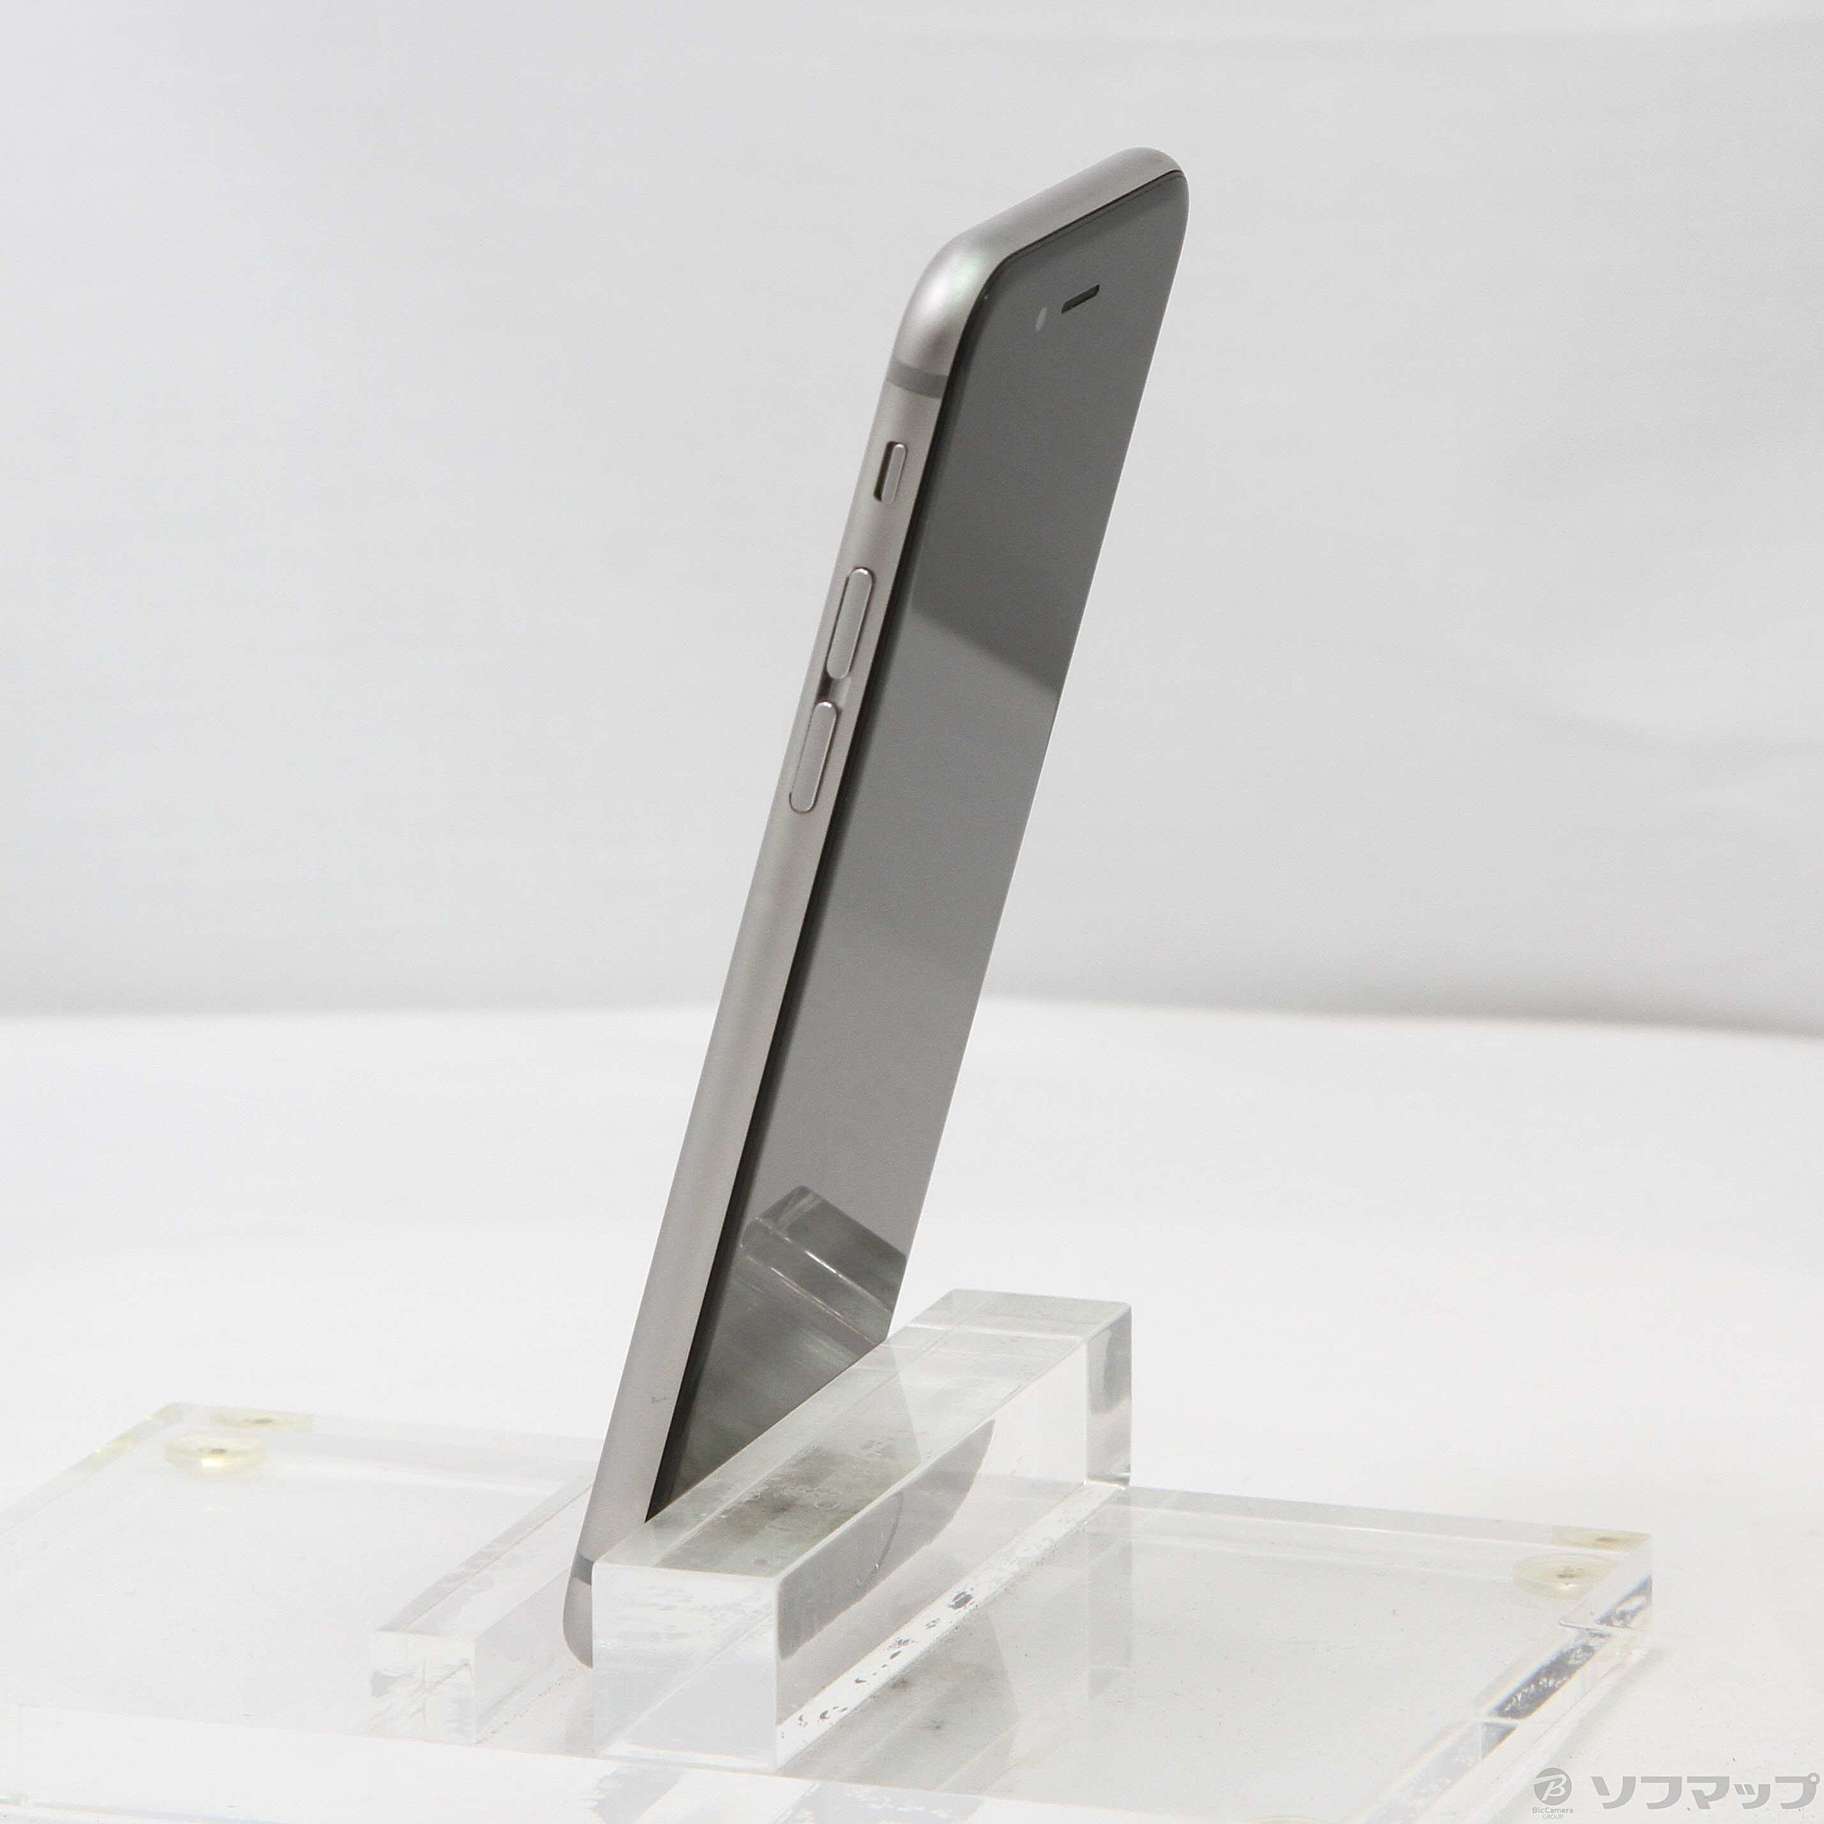 iPhone6s 16GB スペースグレイ MKQJ2J／A SIMフリー